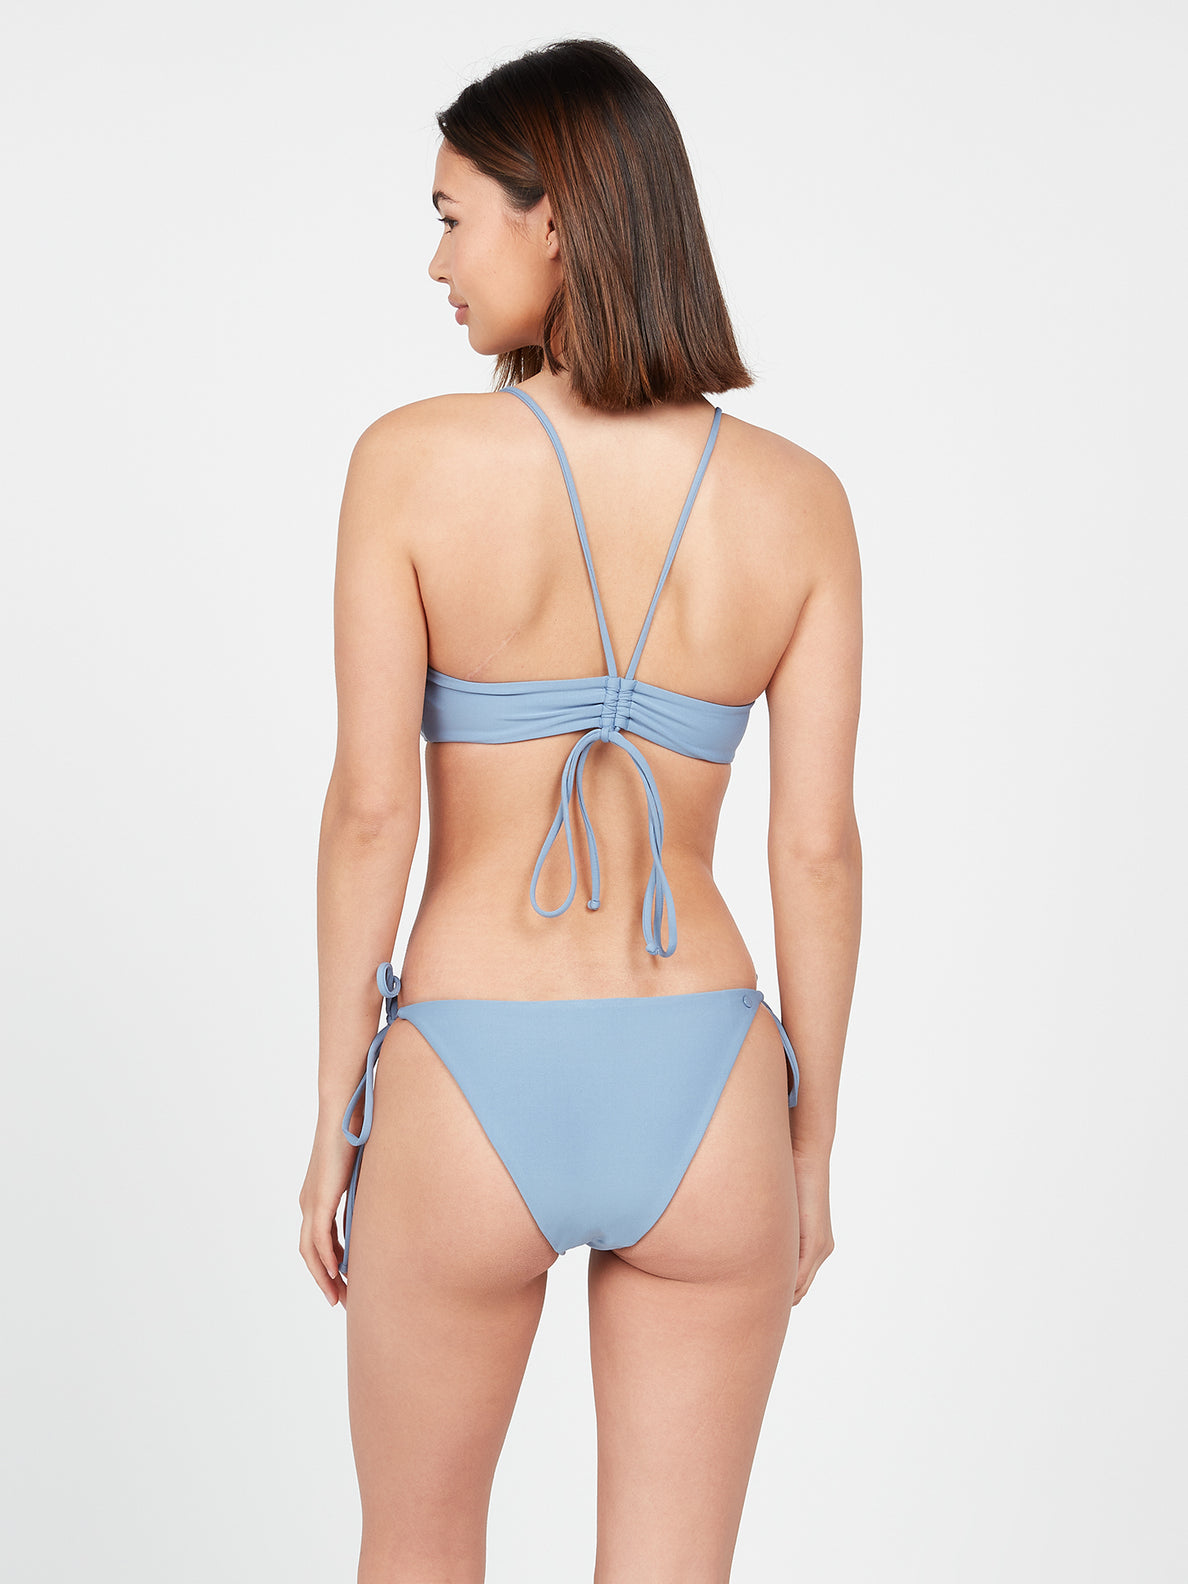 Simply Seamless Scoop Bikini Top - Washed Blue (O1022200_WBU) [B]